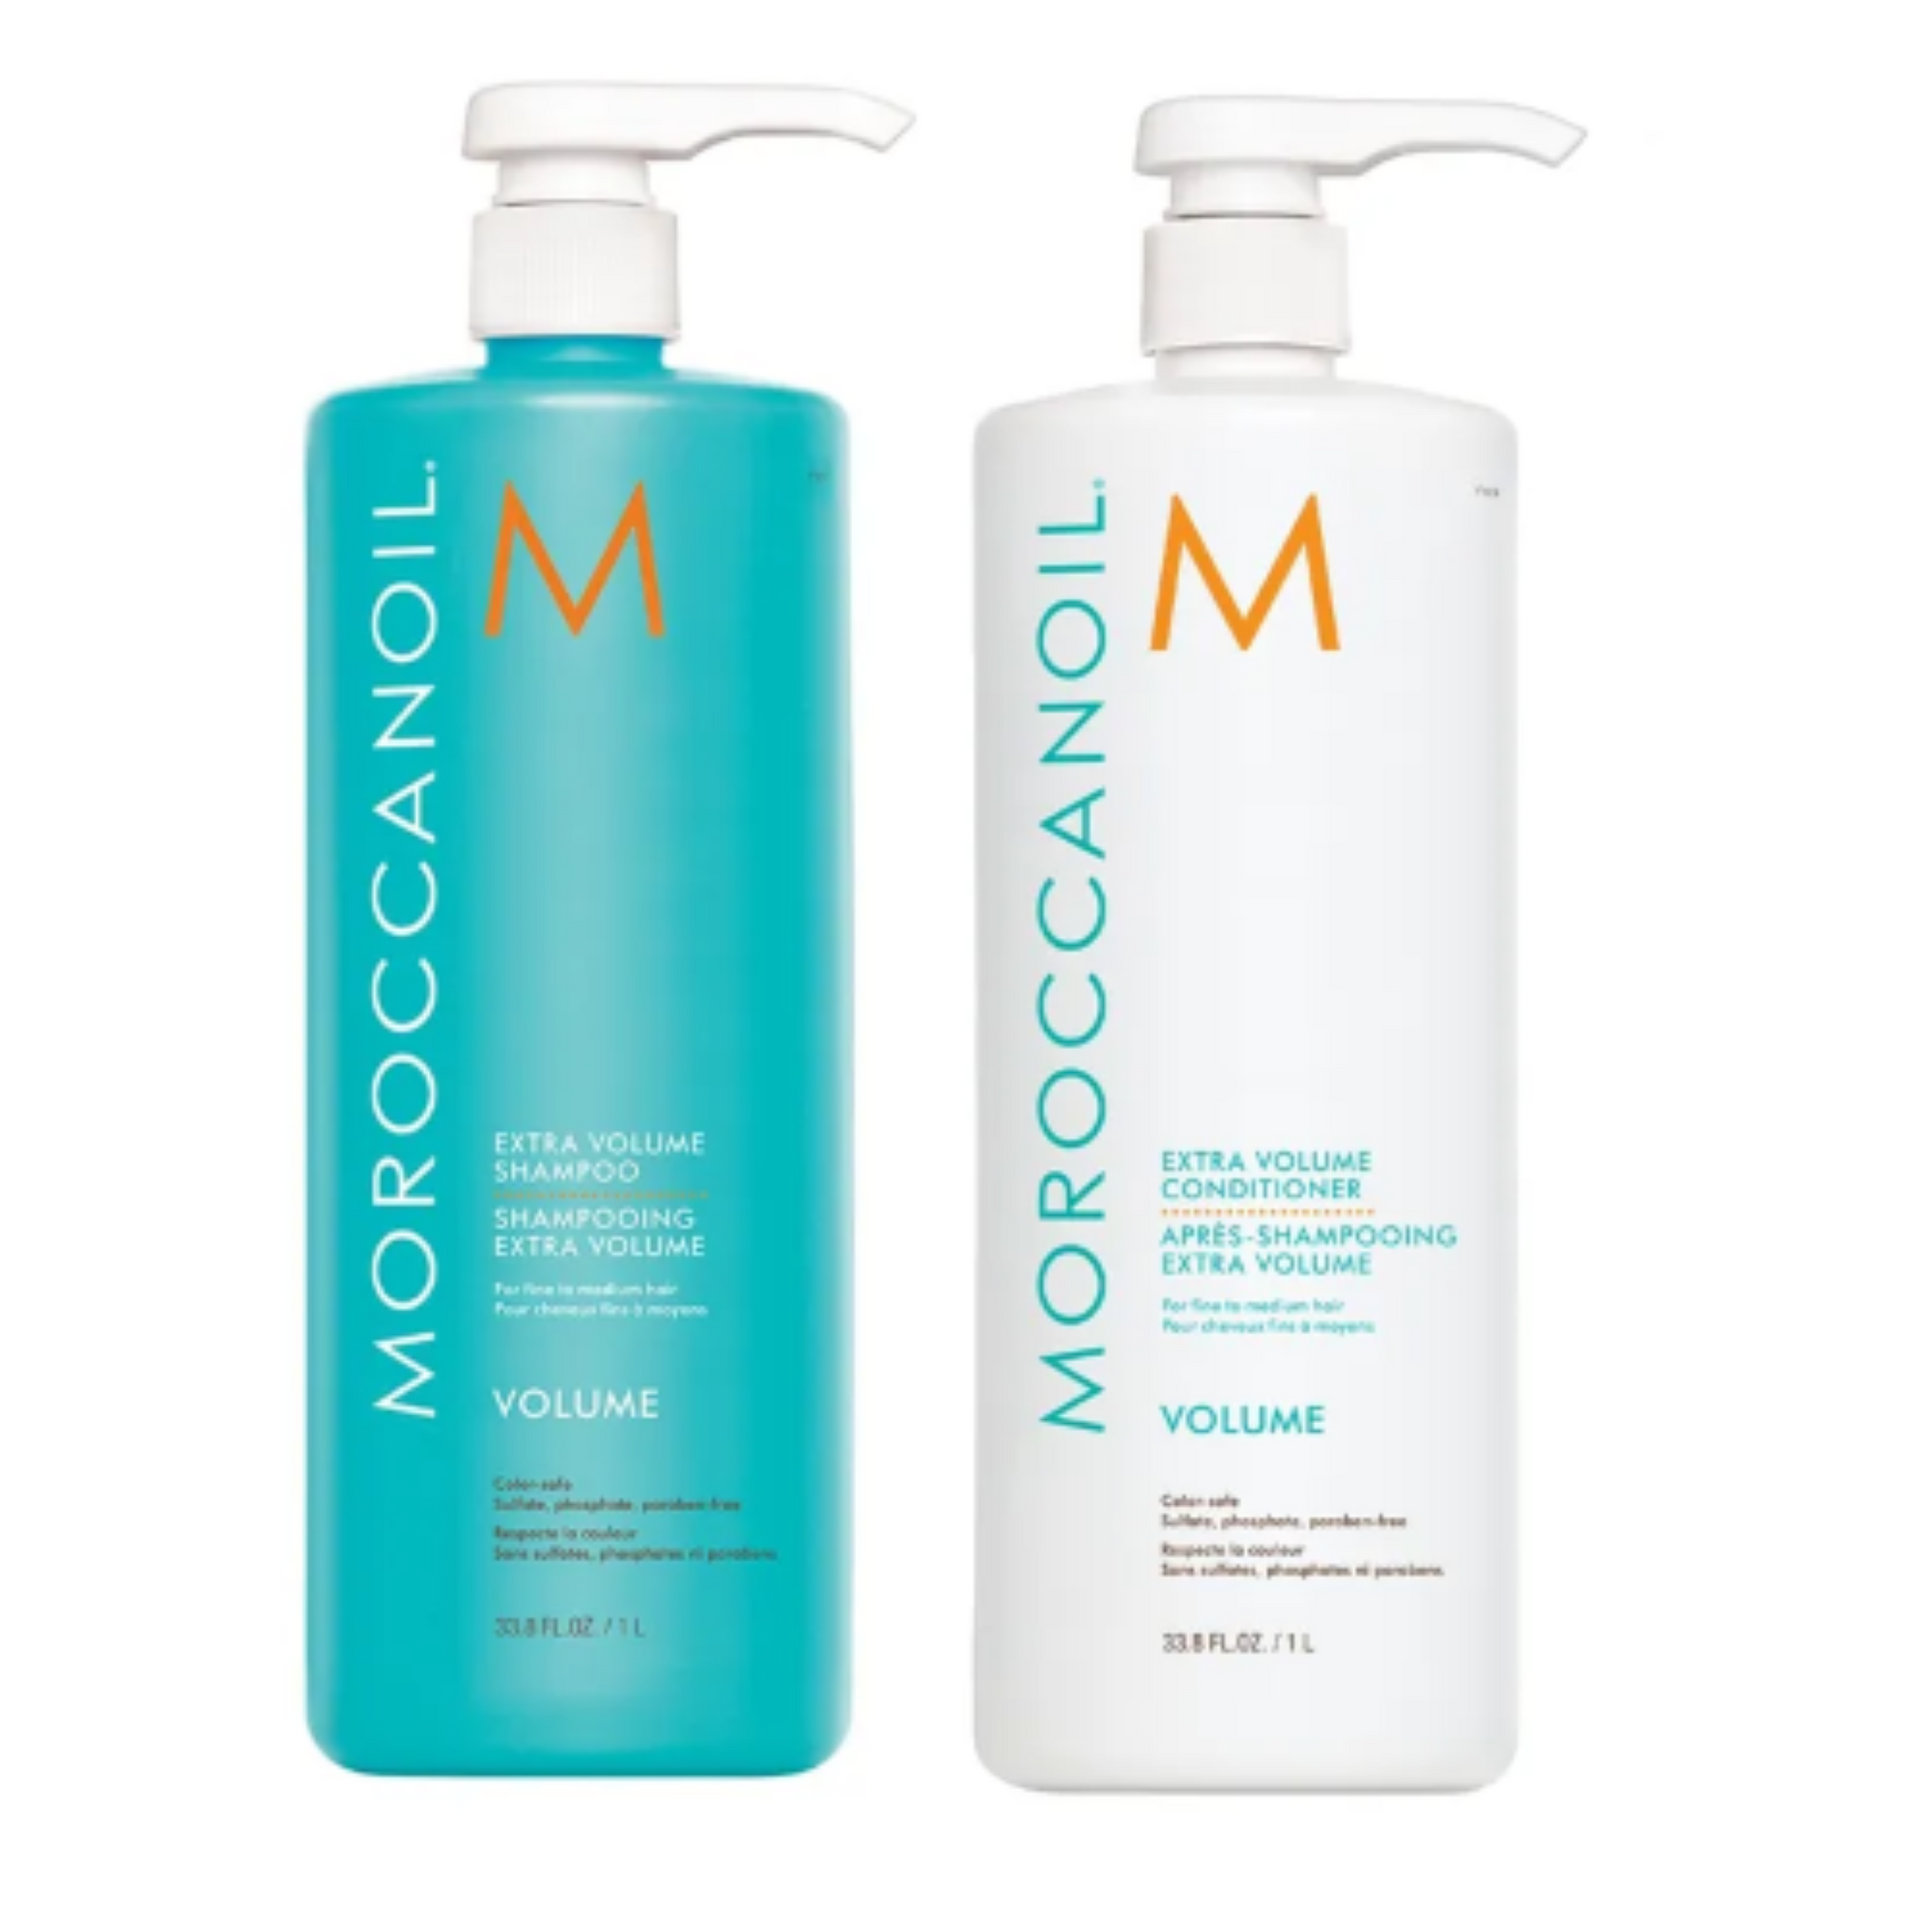 MoroccanOil Extra Volume Shampoo & Conditioner Liter Duo ($150 VALUE)